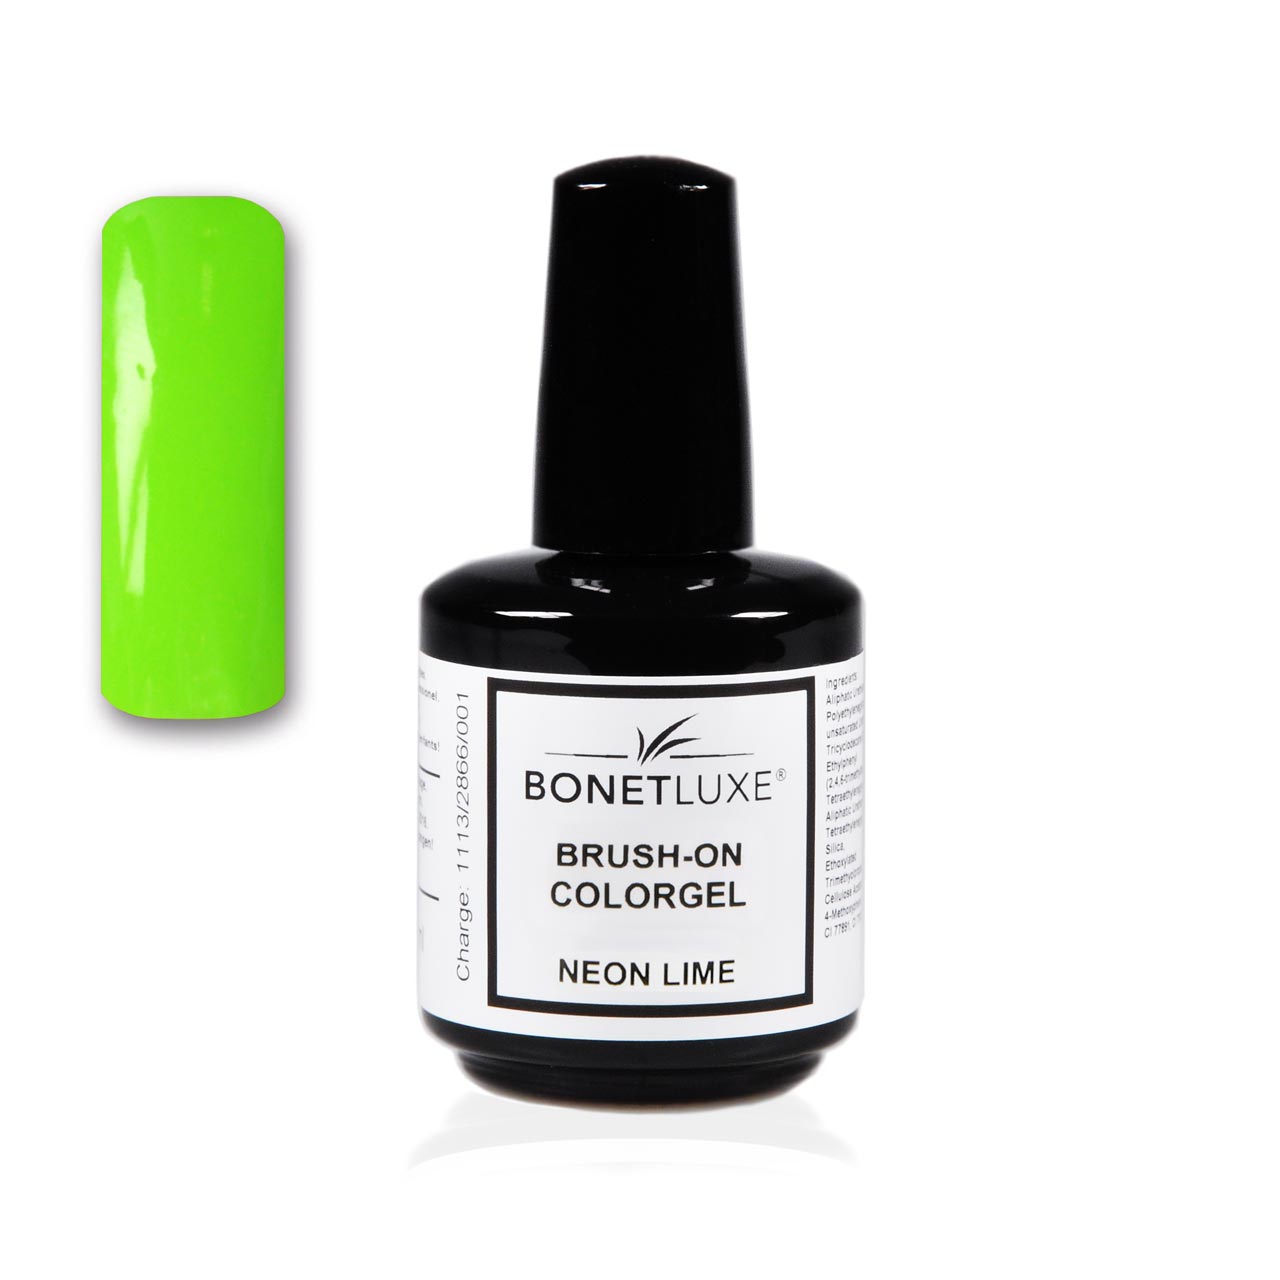 Bonetluxe Brush-On Colorgel Neon Lime